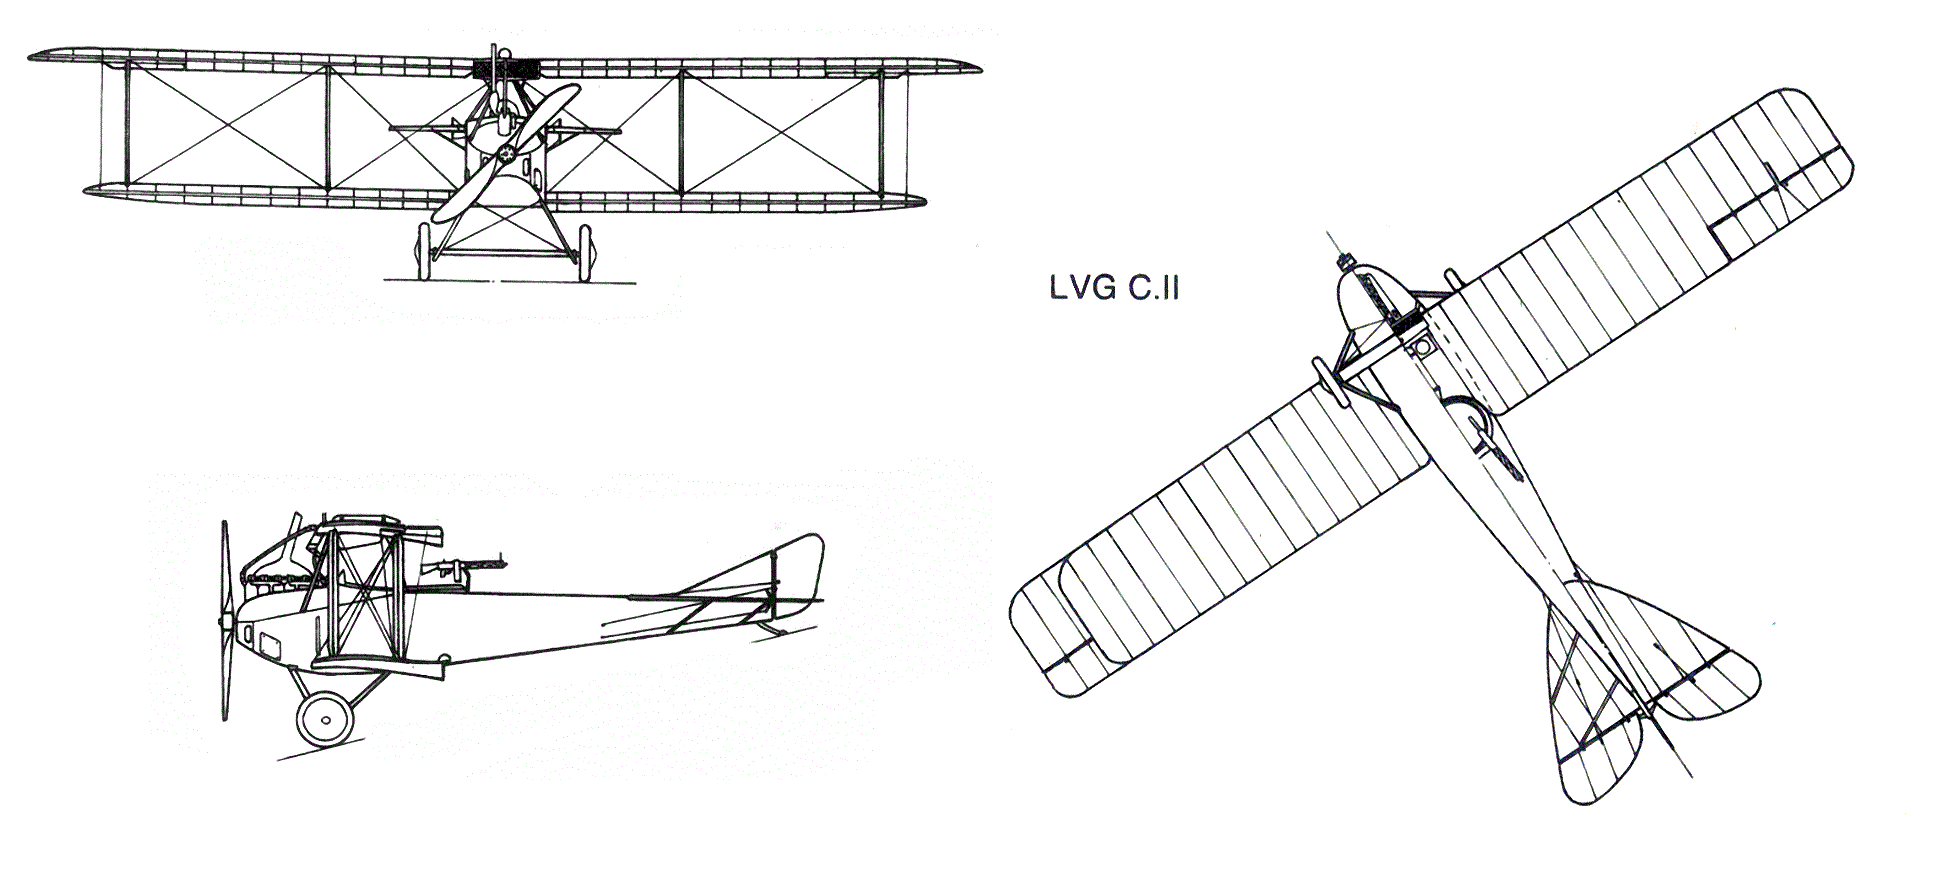 LVG C.II